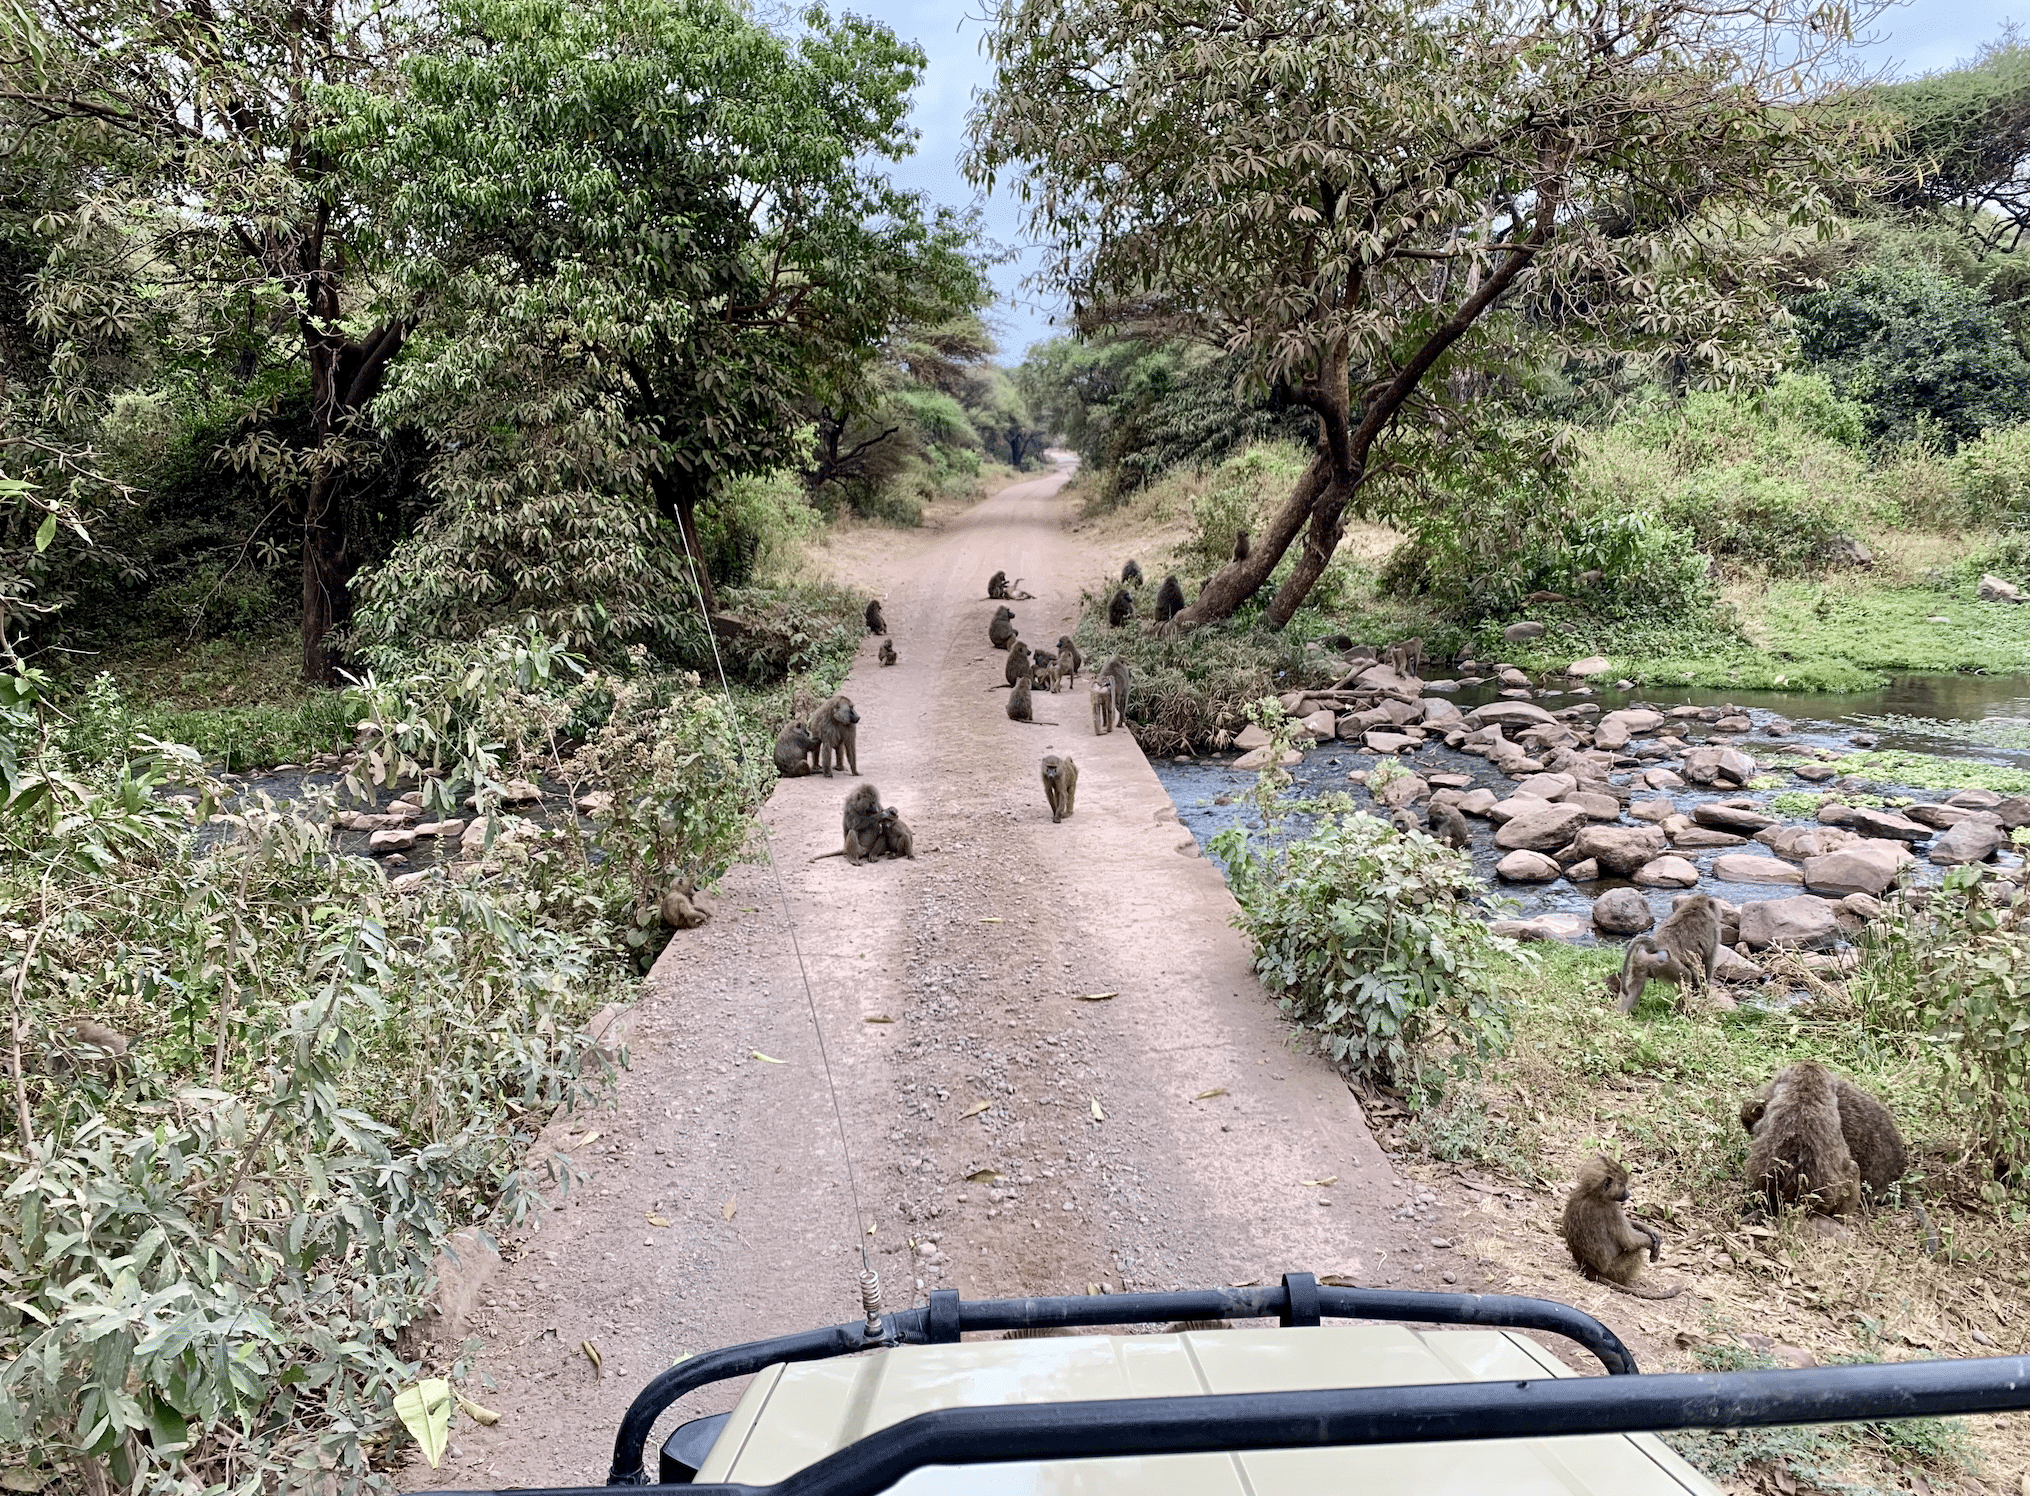 safari en tanzanie : babouins dans le parc du lac manyara